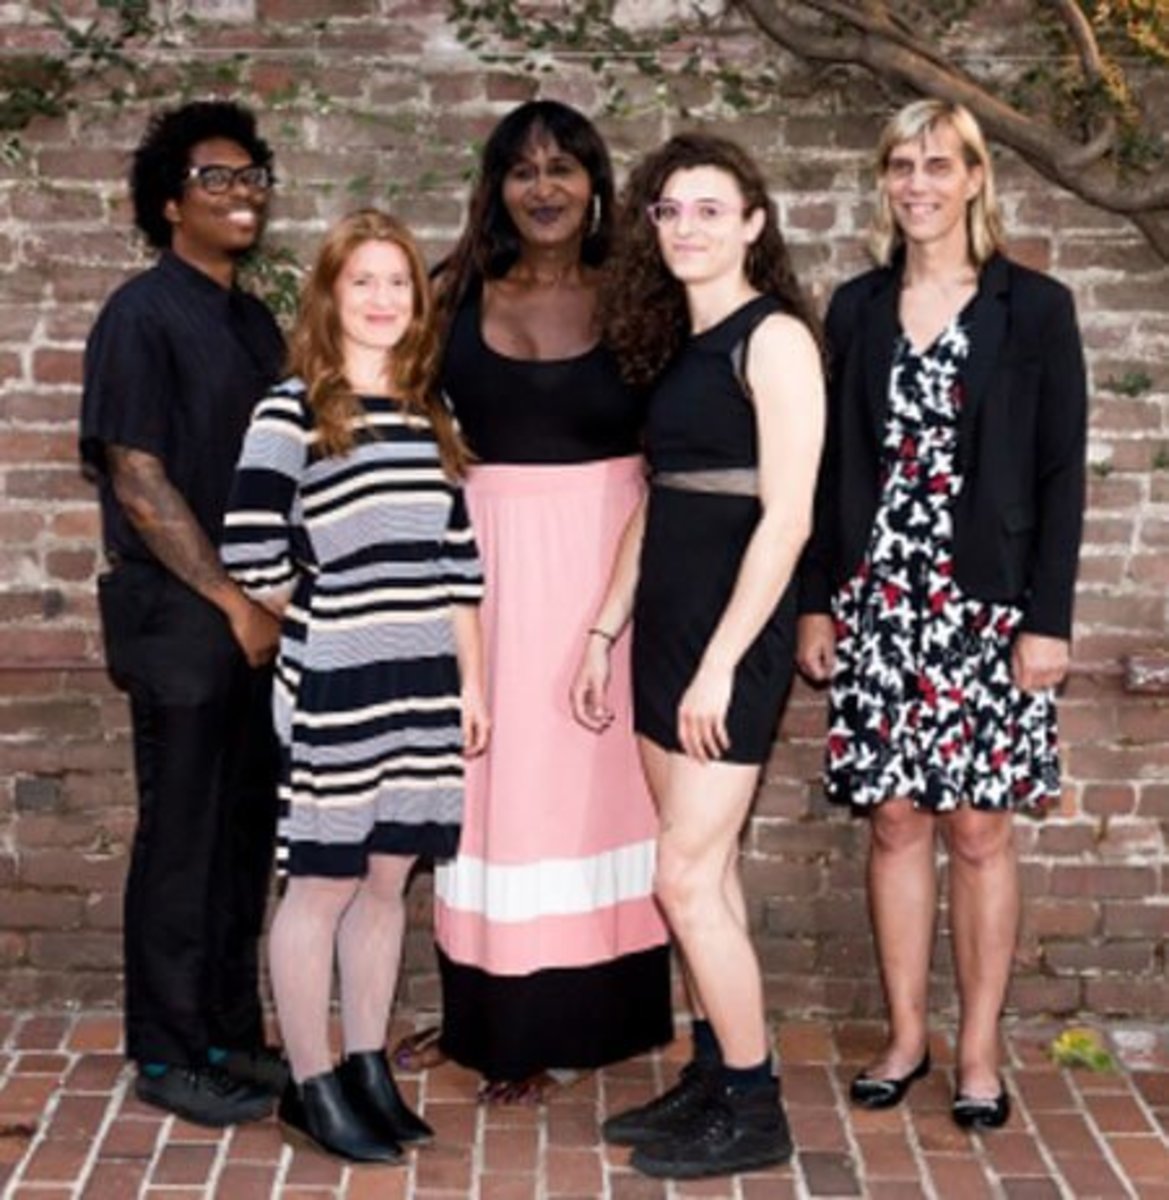  Women's Policy Institute team